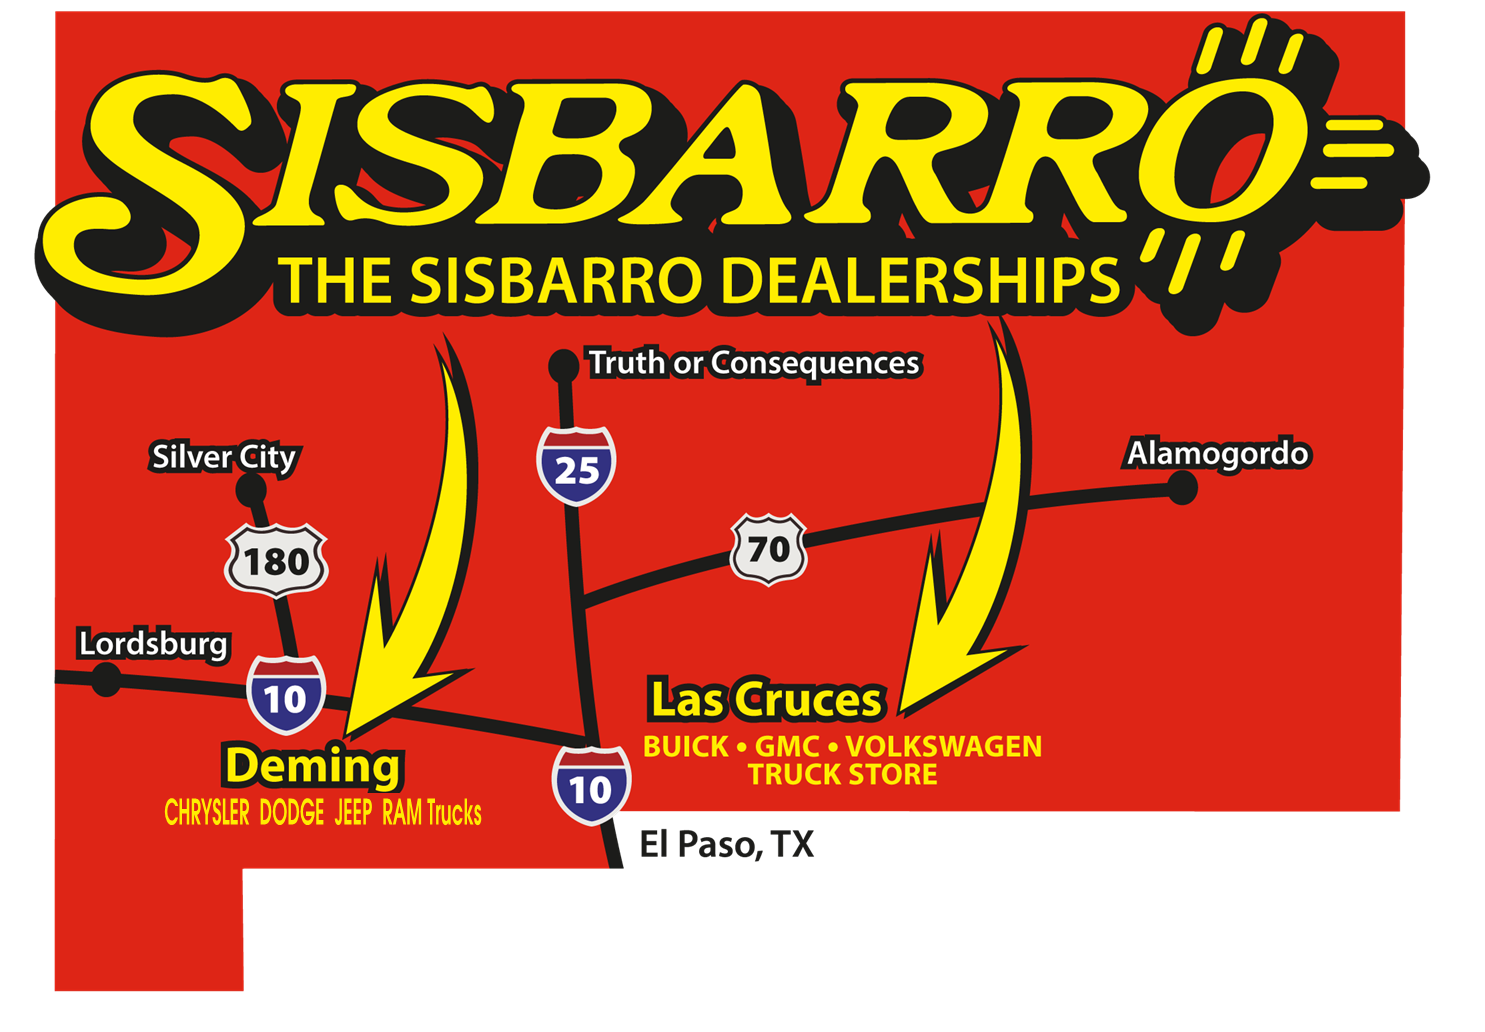 The Sisbarro Dealerships